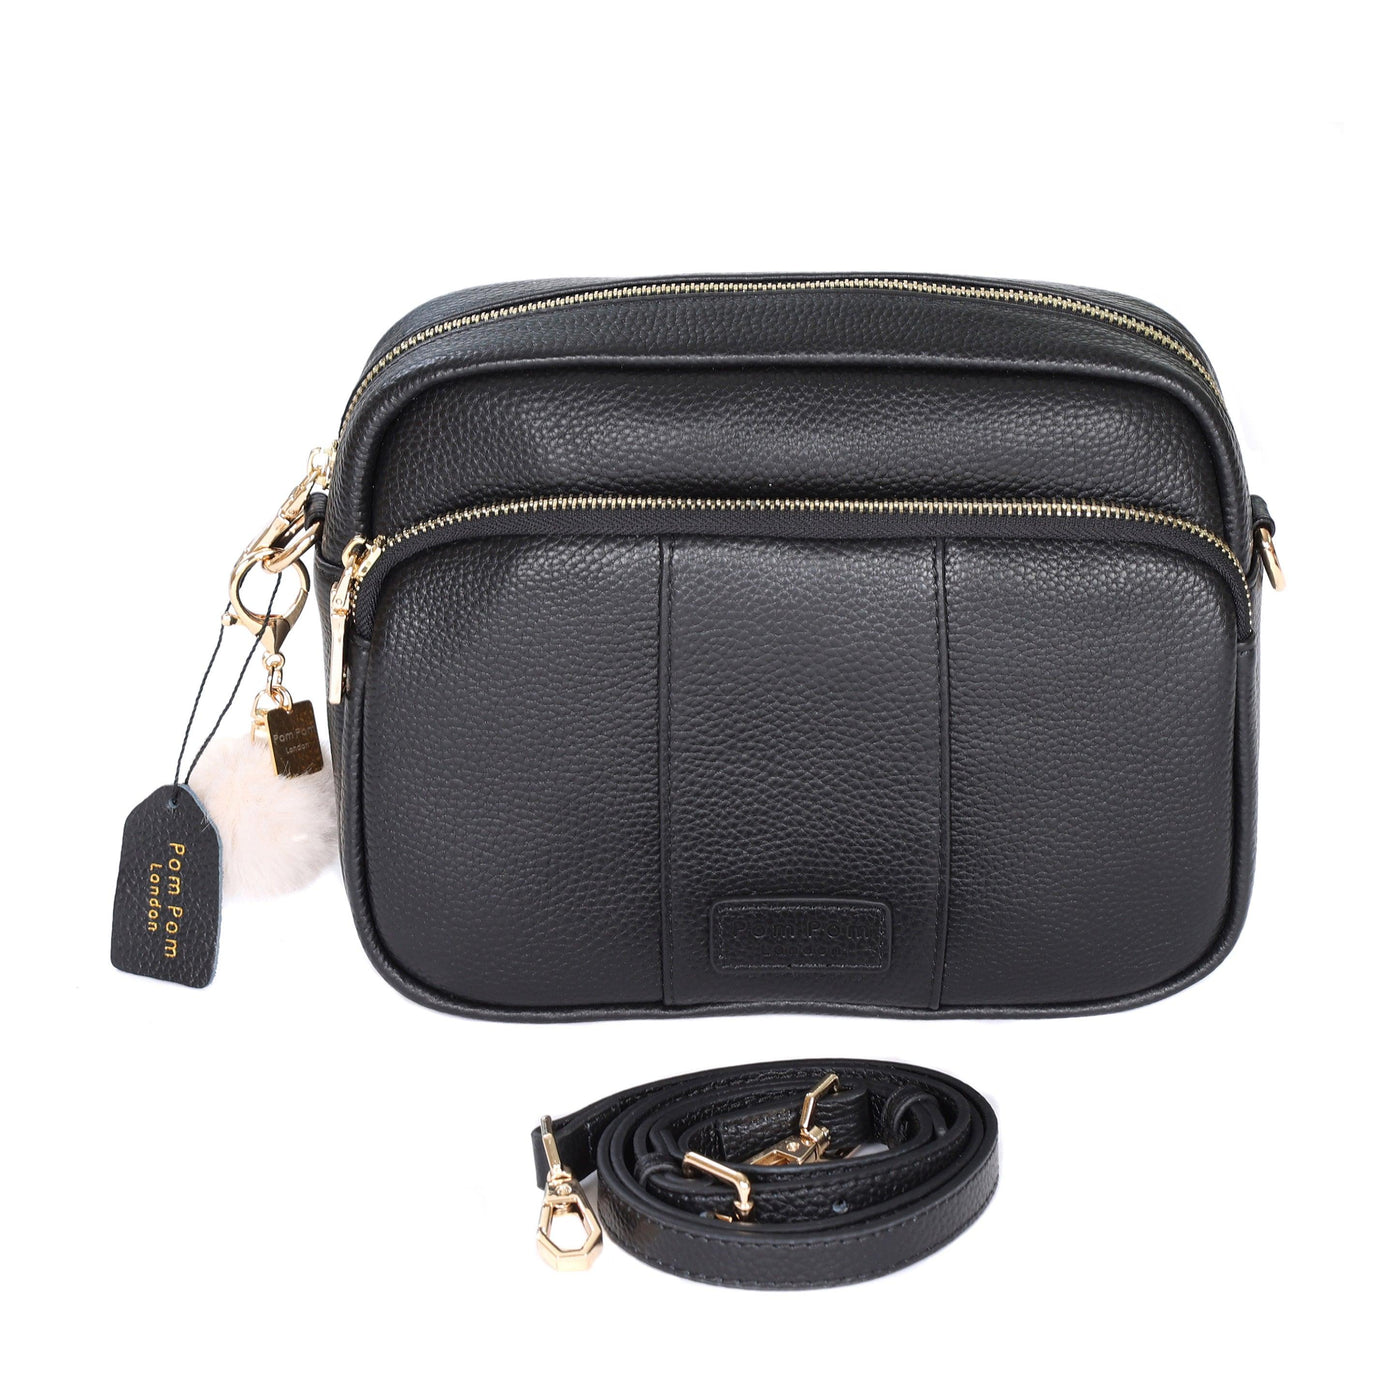 Mayfair Plus Bag Black & Accessories - Pom Pom London